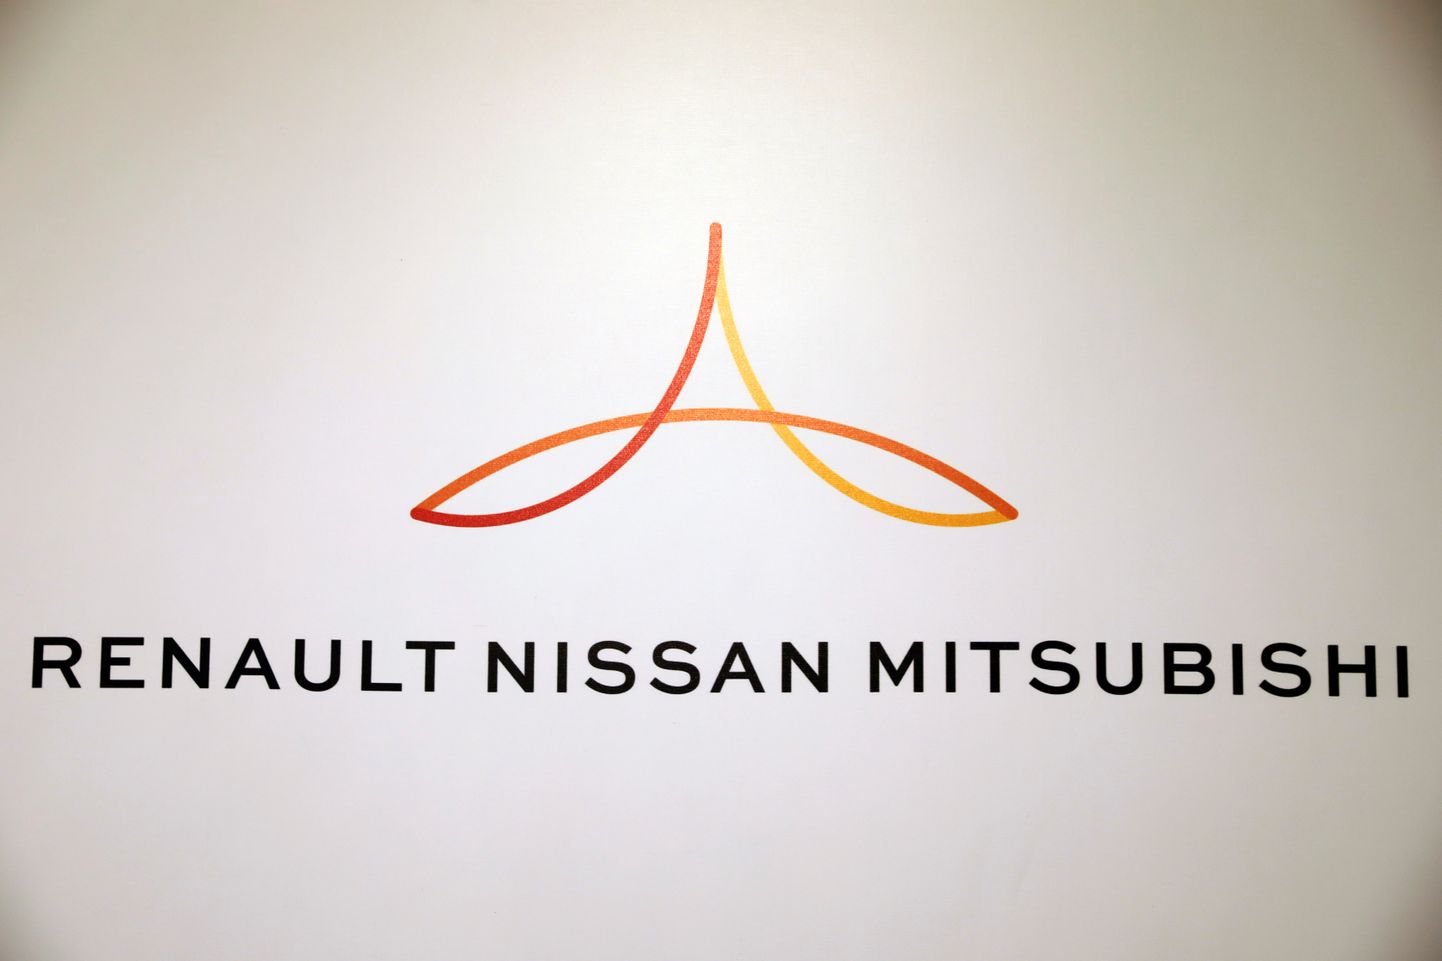 Renault-Nissan-Mitsubishi liidu logo.